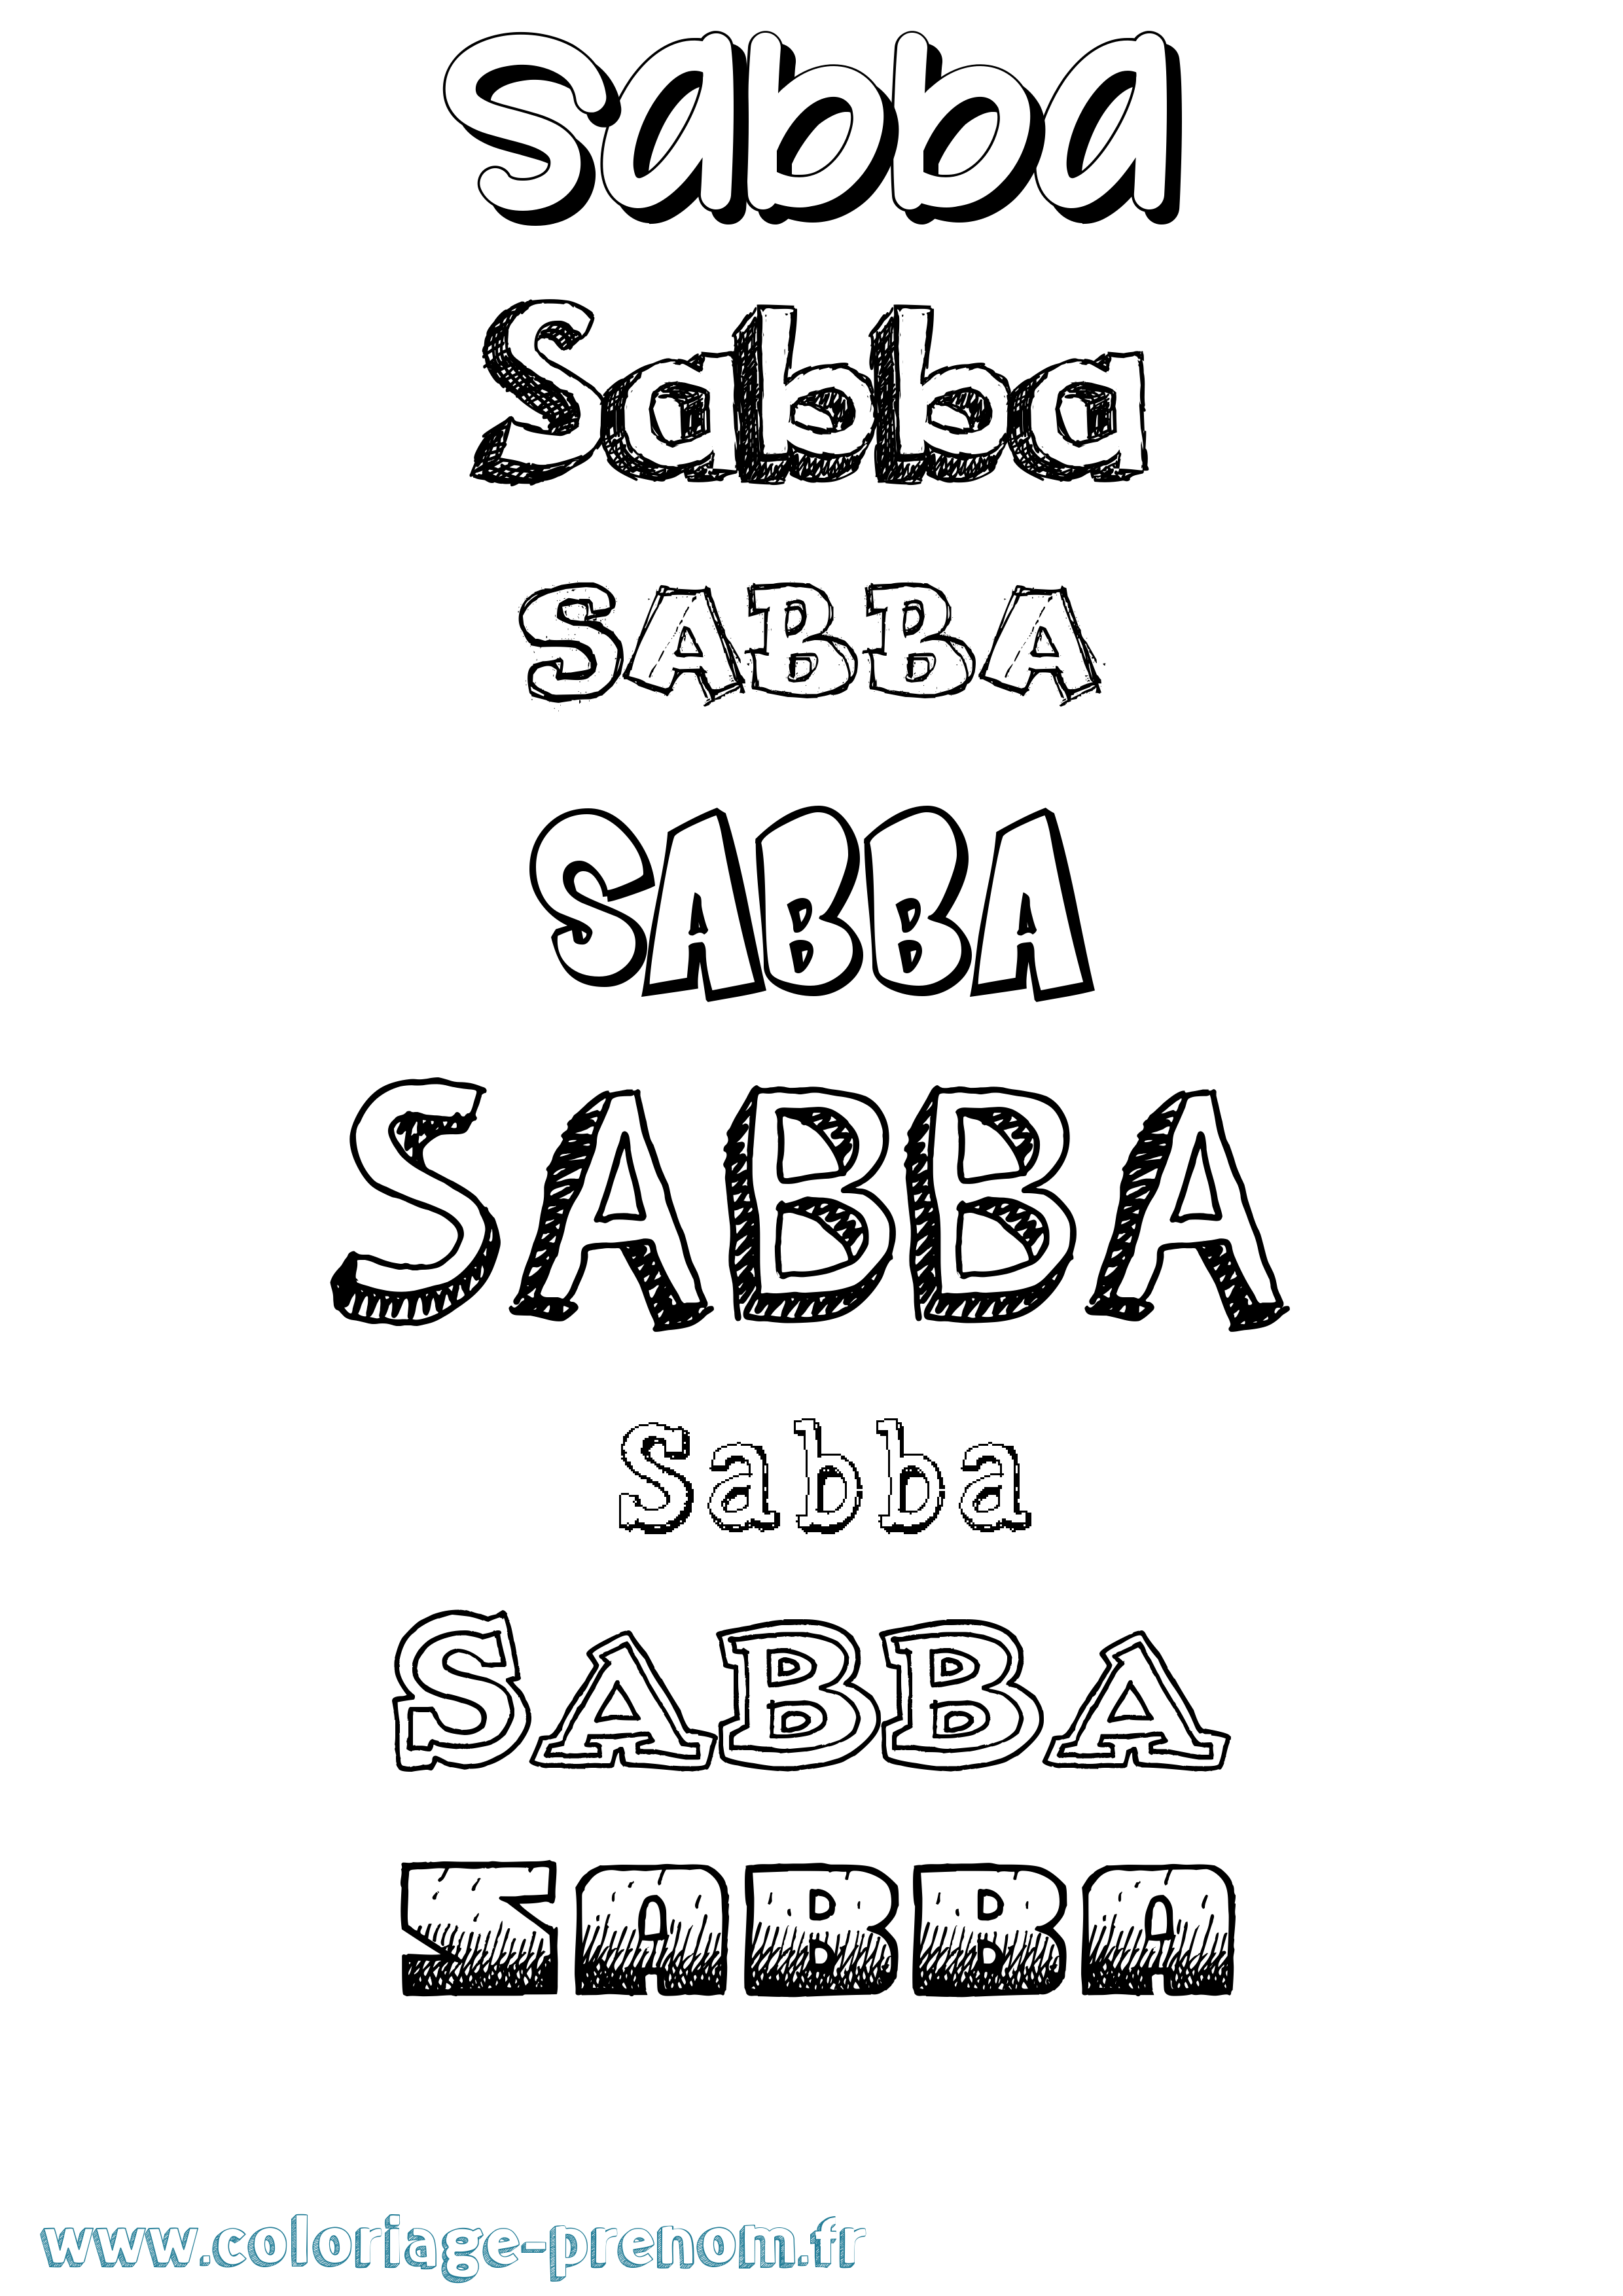 Coloriage prénom Sabba Dessiné